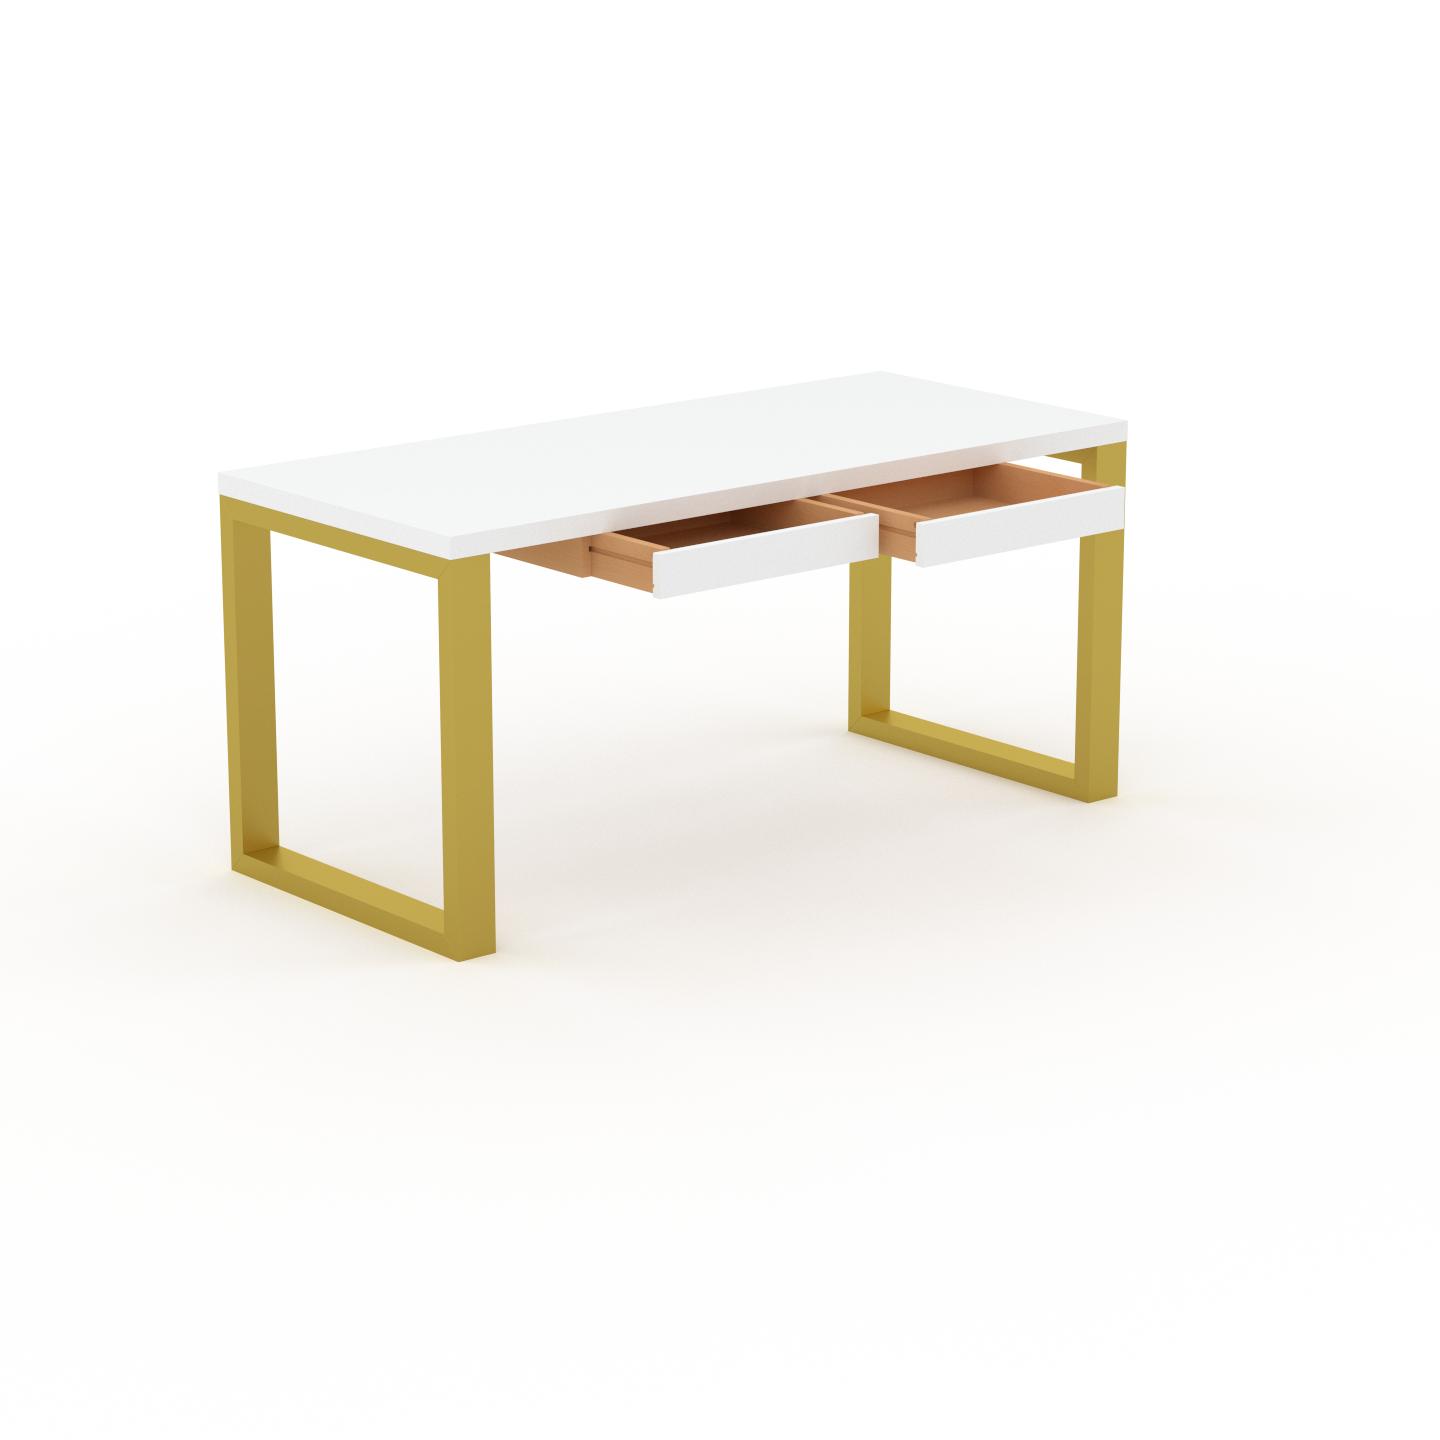 MYCS Schreibtisch Massivholz Weiß - Moderner Massivholz-Schreibtisch: mit 2 Schublade/n - Hochwertige Materialien - 160 x 75 x 70 cm, konfigurierbar